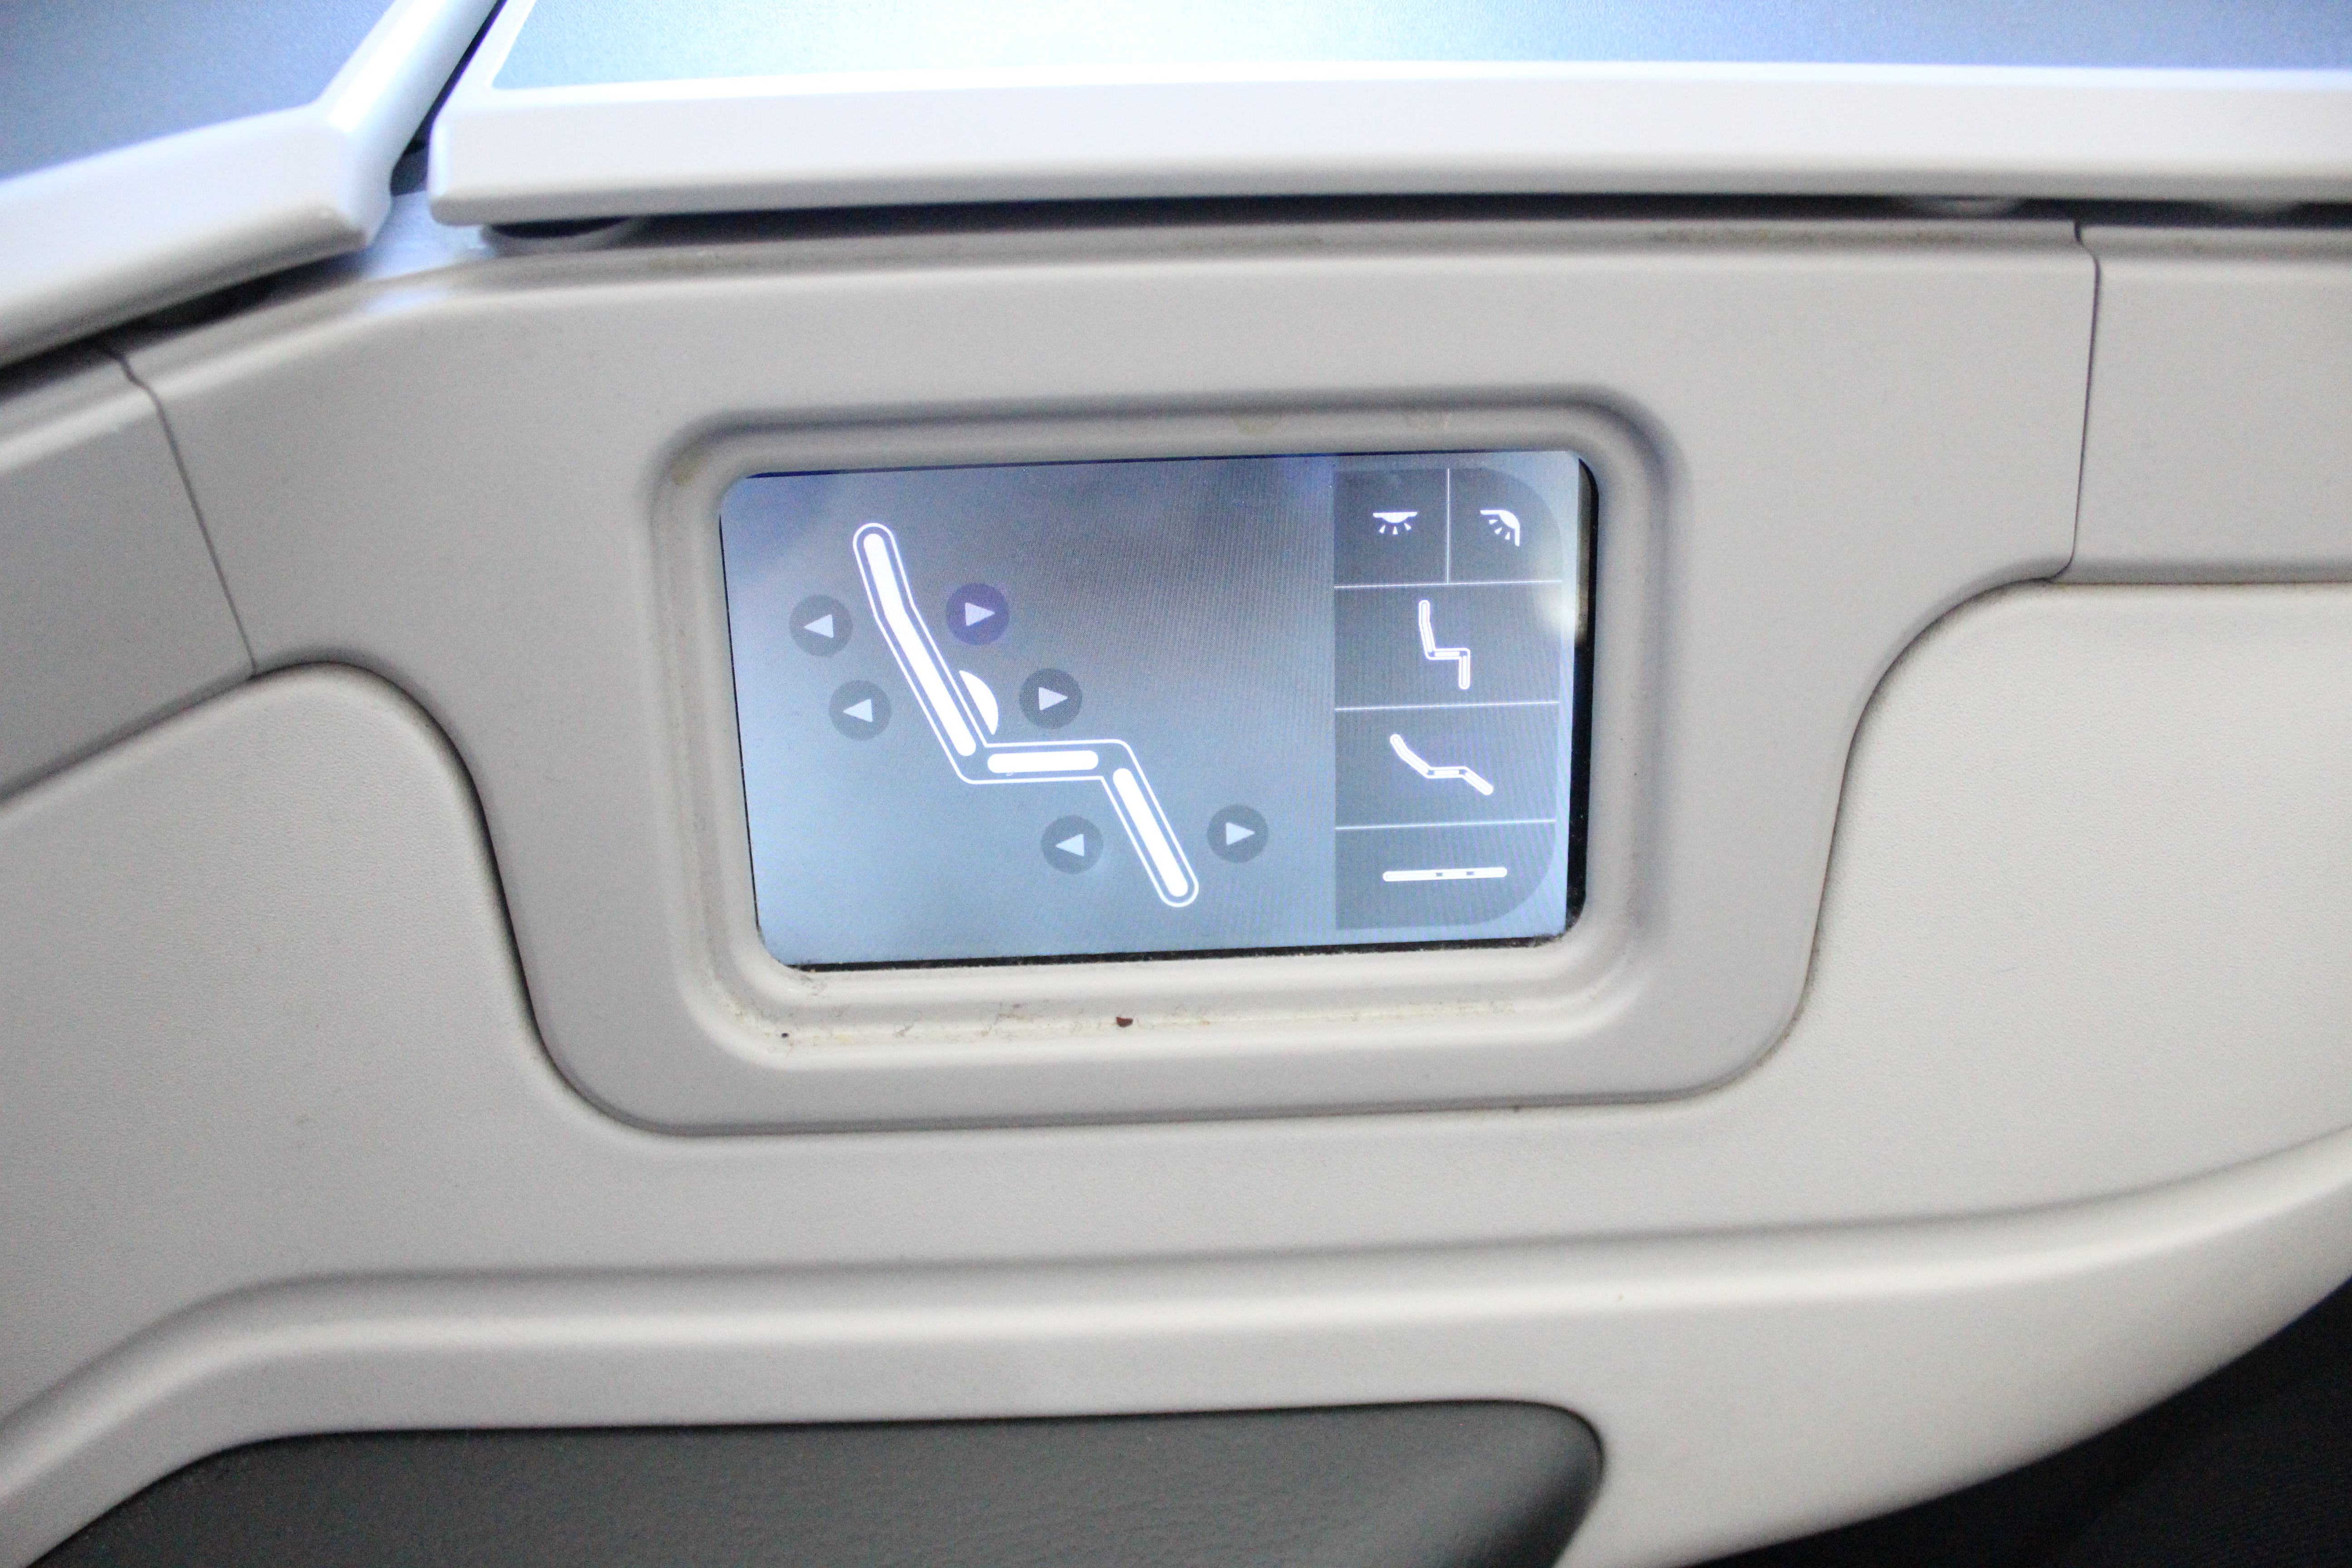 Aeromexico Business Class Seat Controls